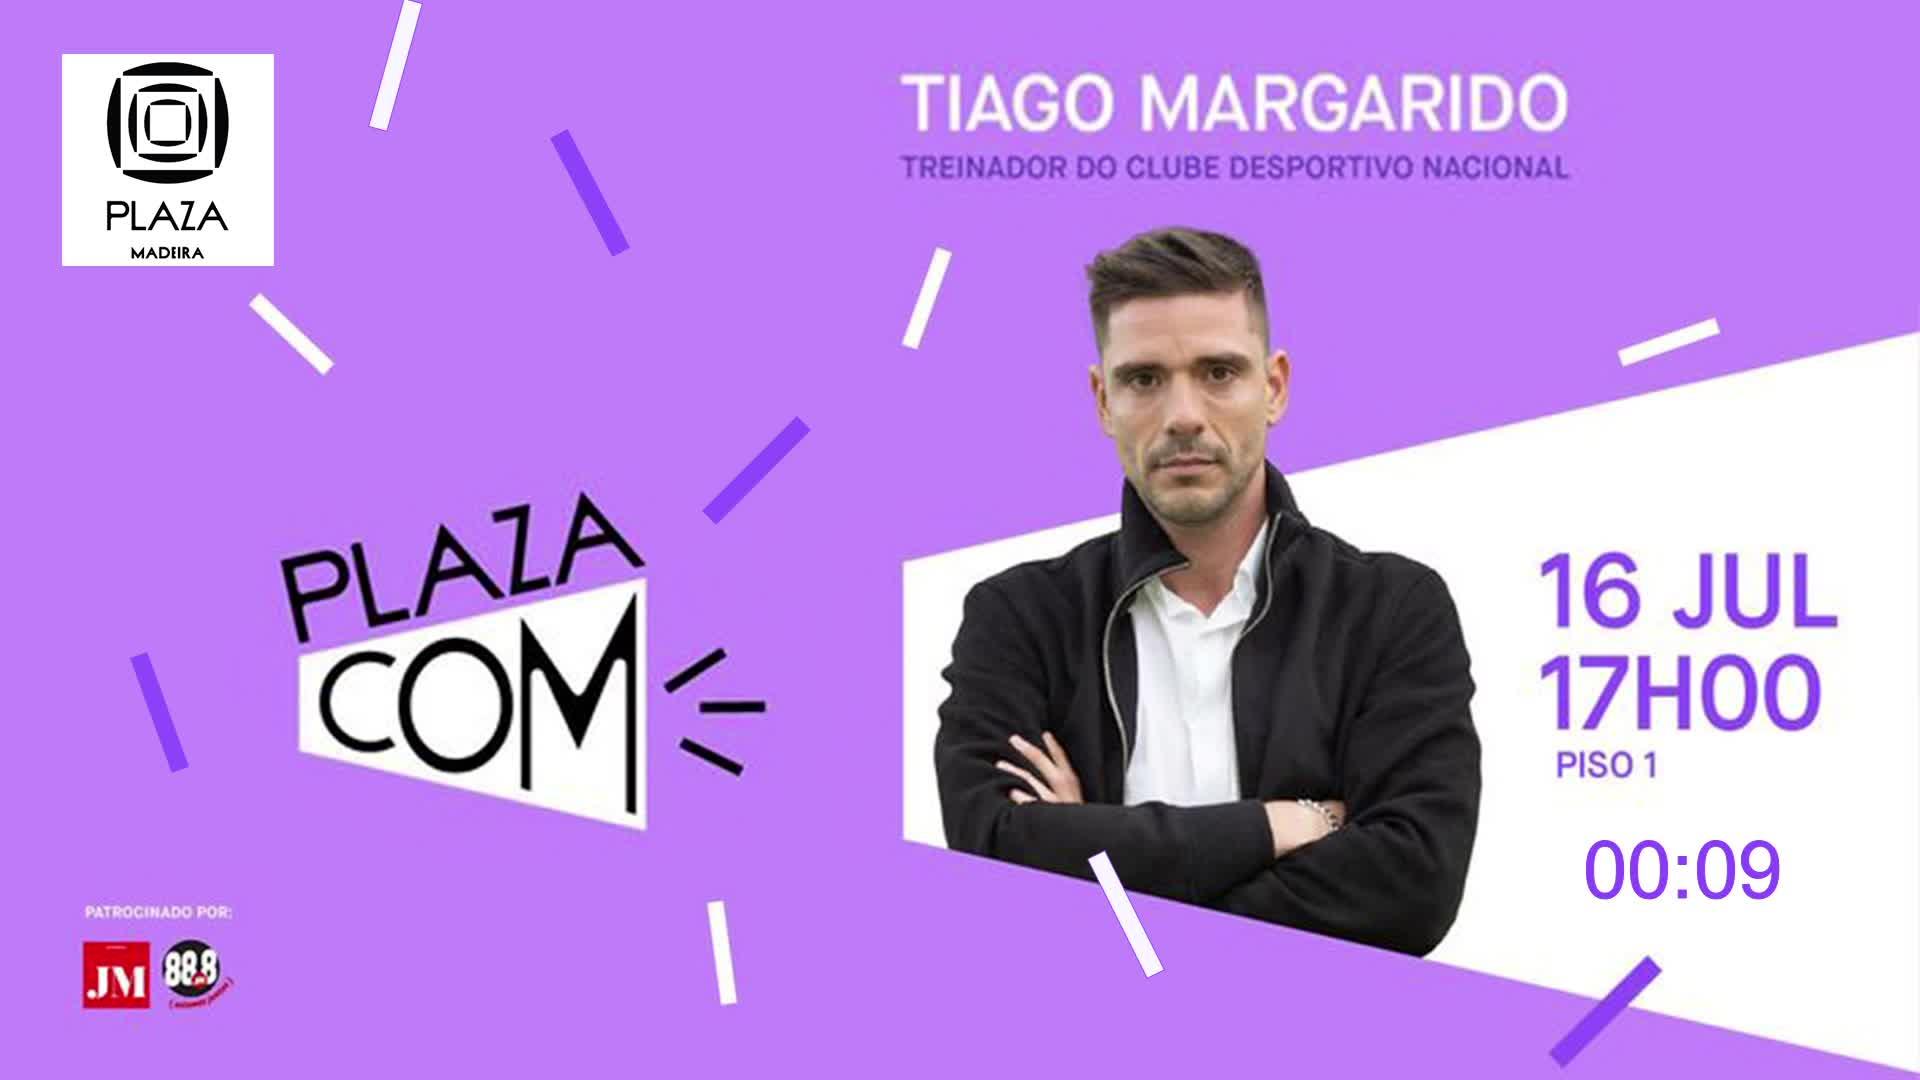 PLAZA COM | TIAGO MARGARIDO